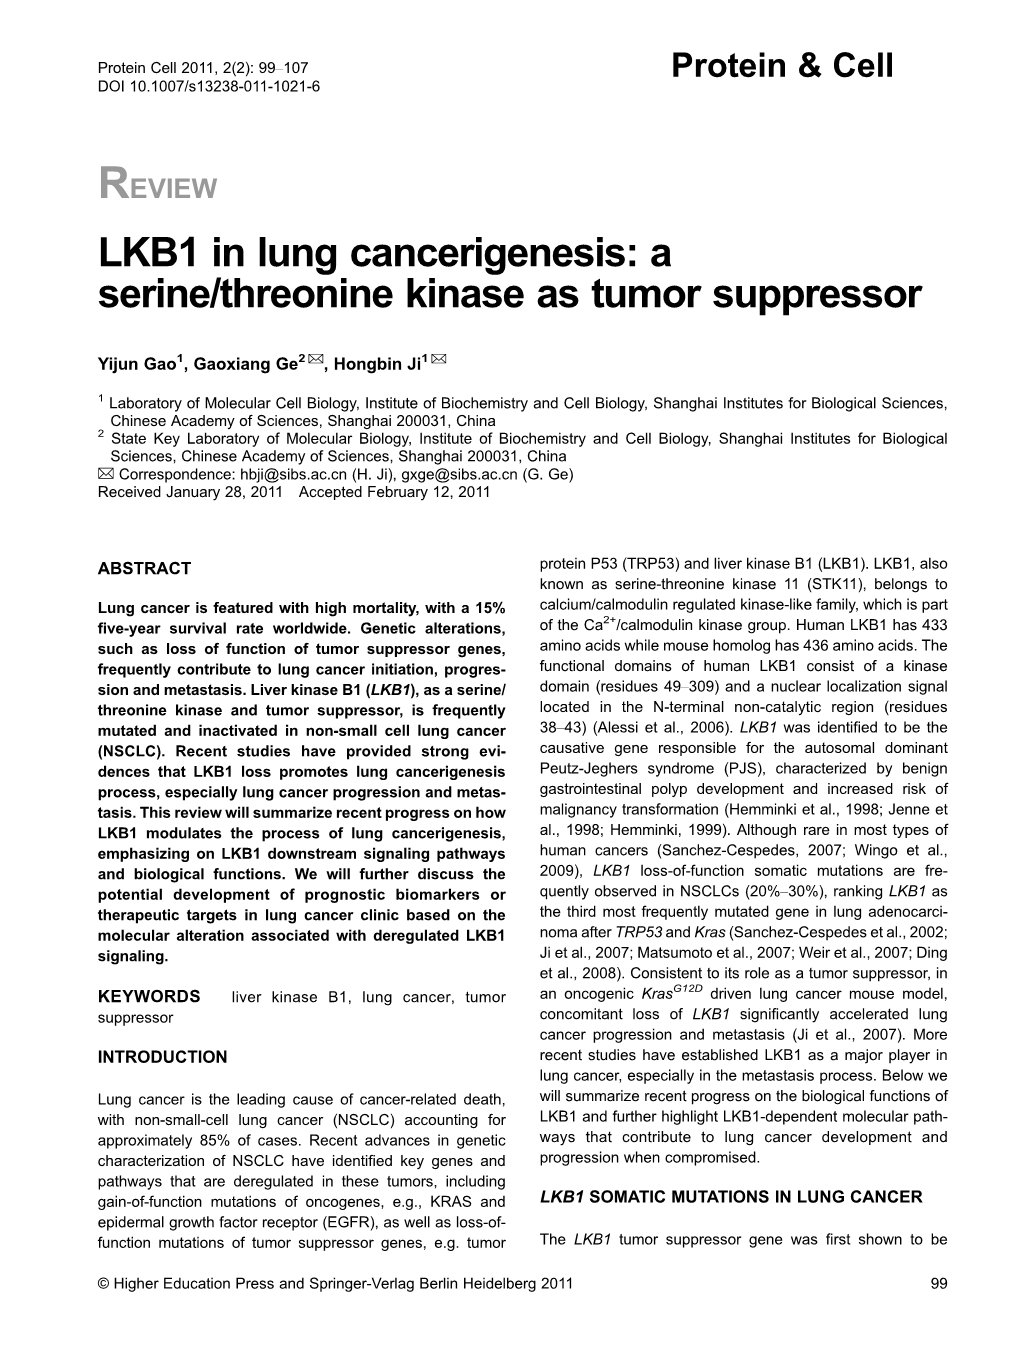 A Serine/Threonine Kinase As Tumor Suppressor